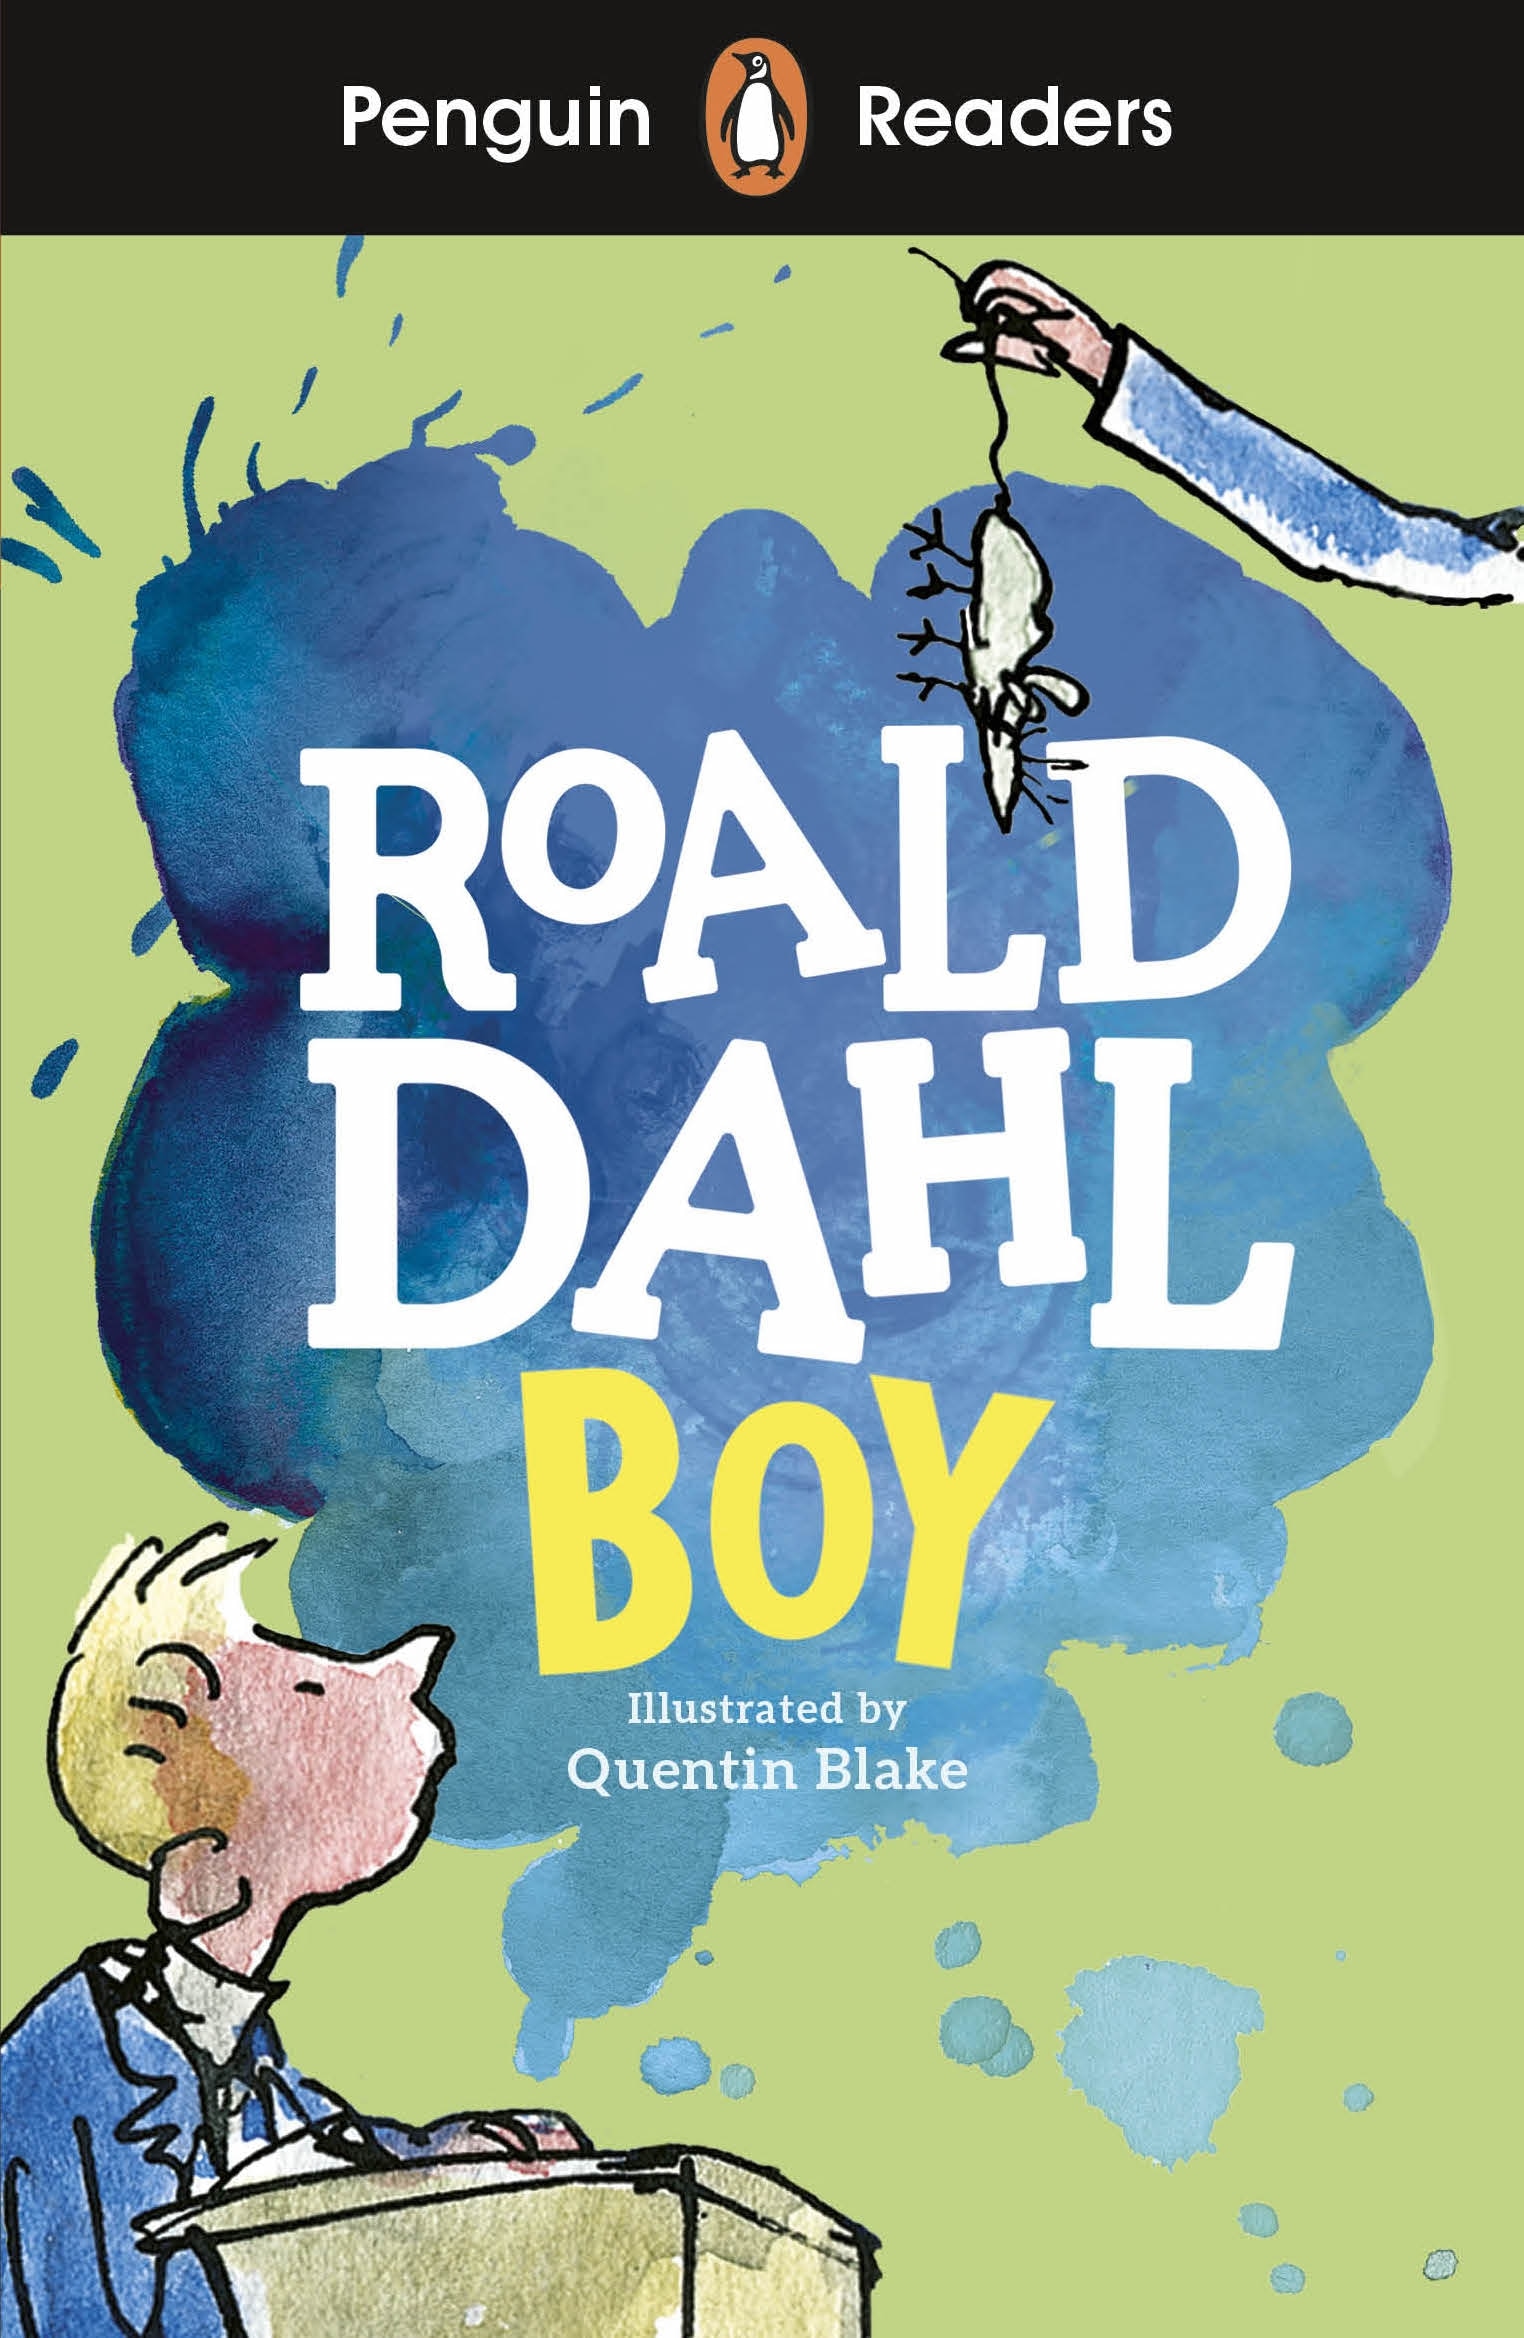 Book “Penguin Readers Level 2: Boy (ELT Graded Reader)” by Roald Dahl, Quentin Blake — September 5, 2019